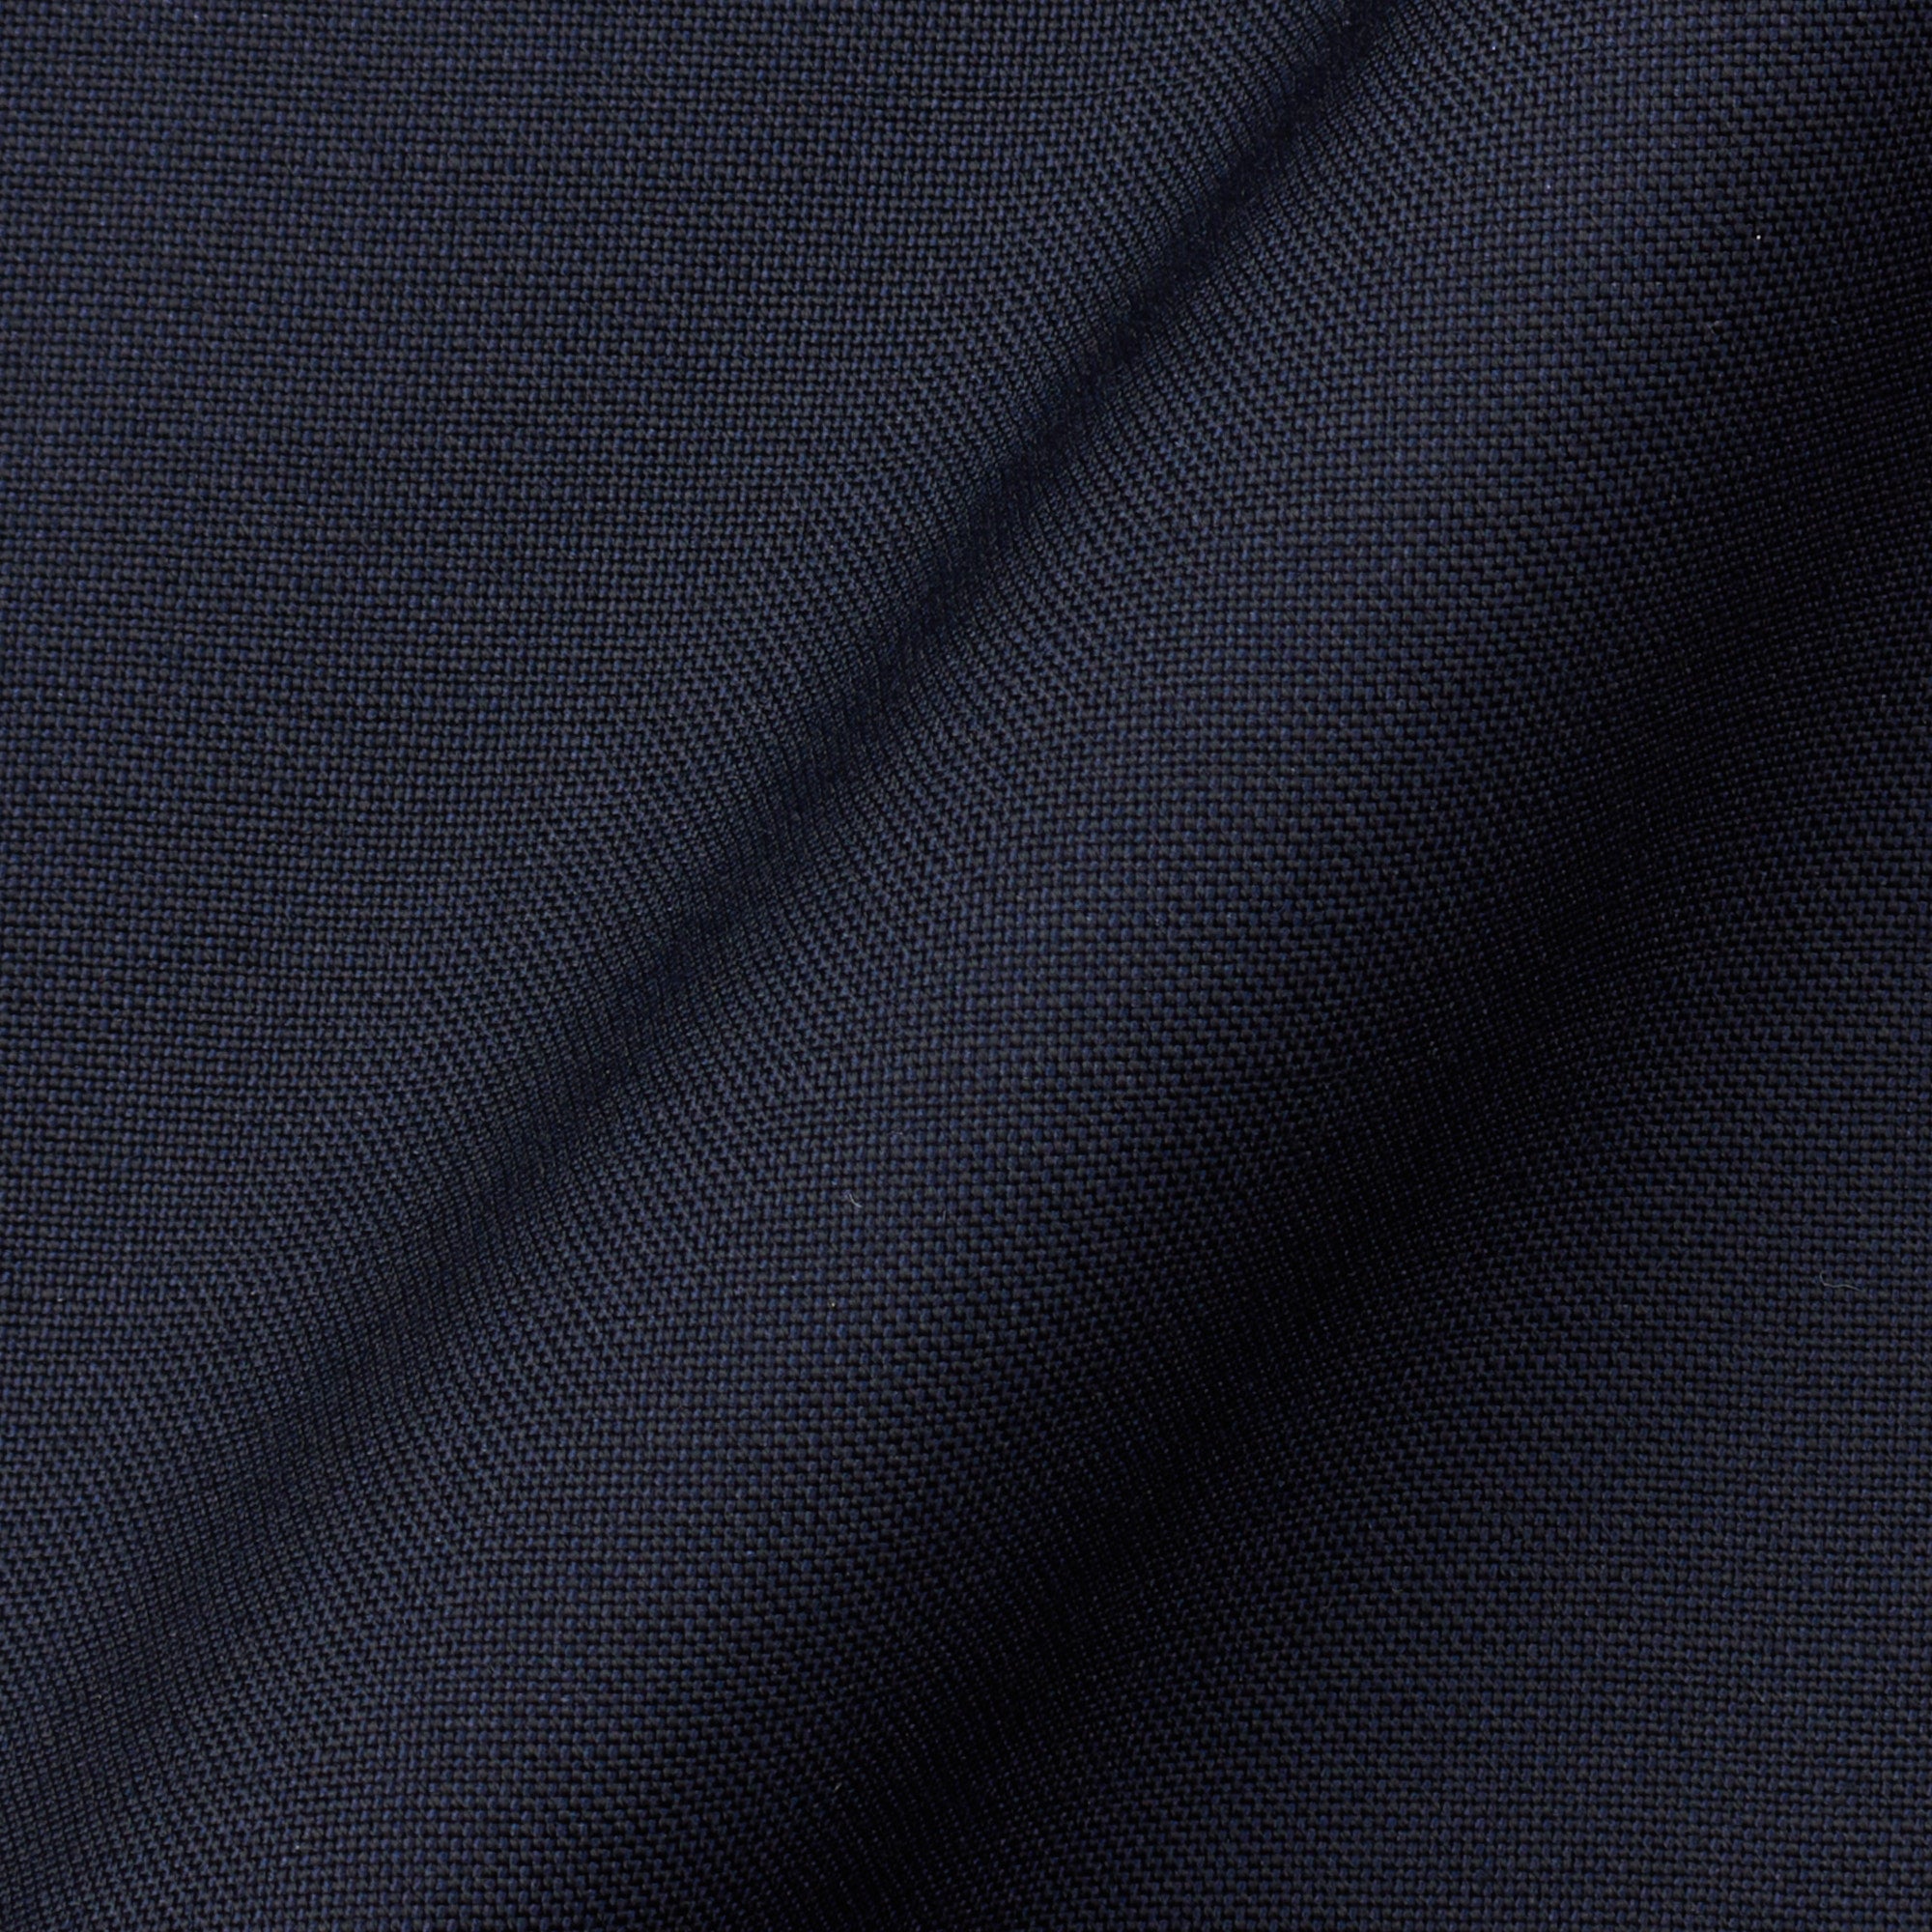 RUBINACCI LH Handmade Bespoke Black Wool Peak Lapel Jacket EU 50 NEW US 40